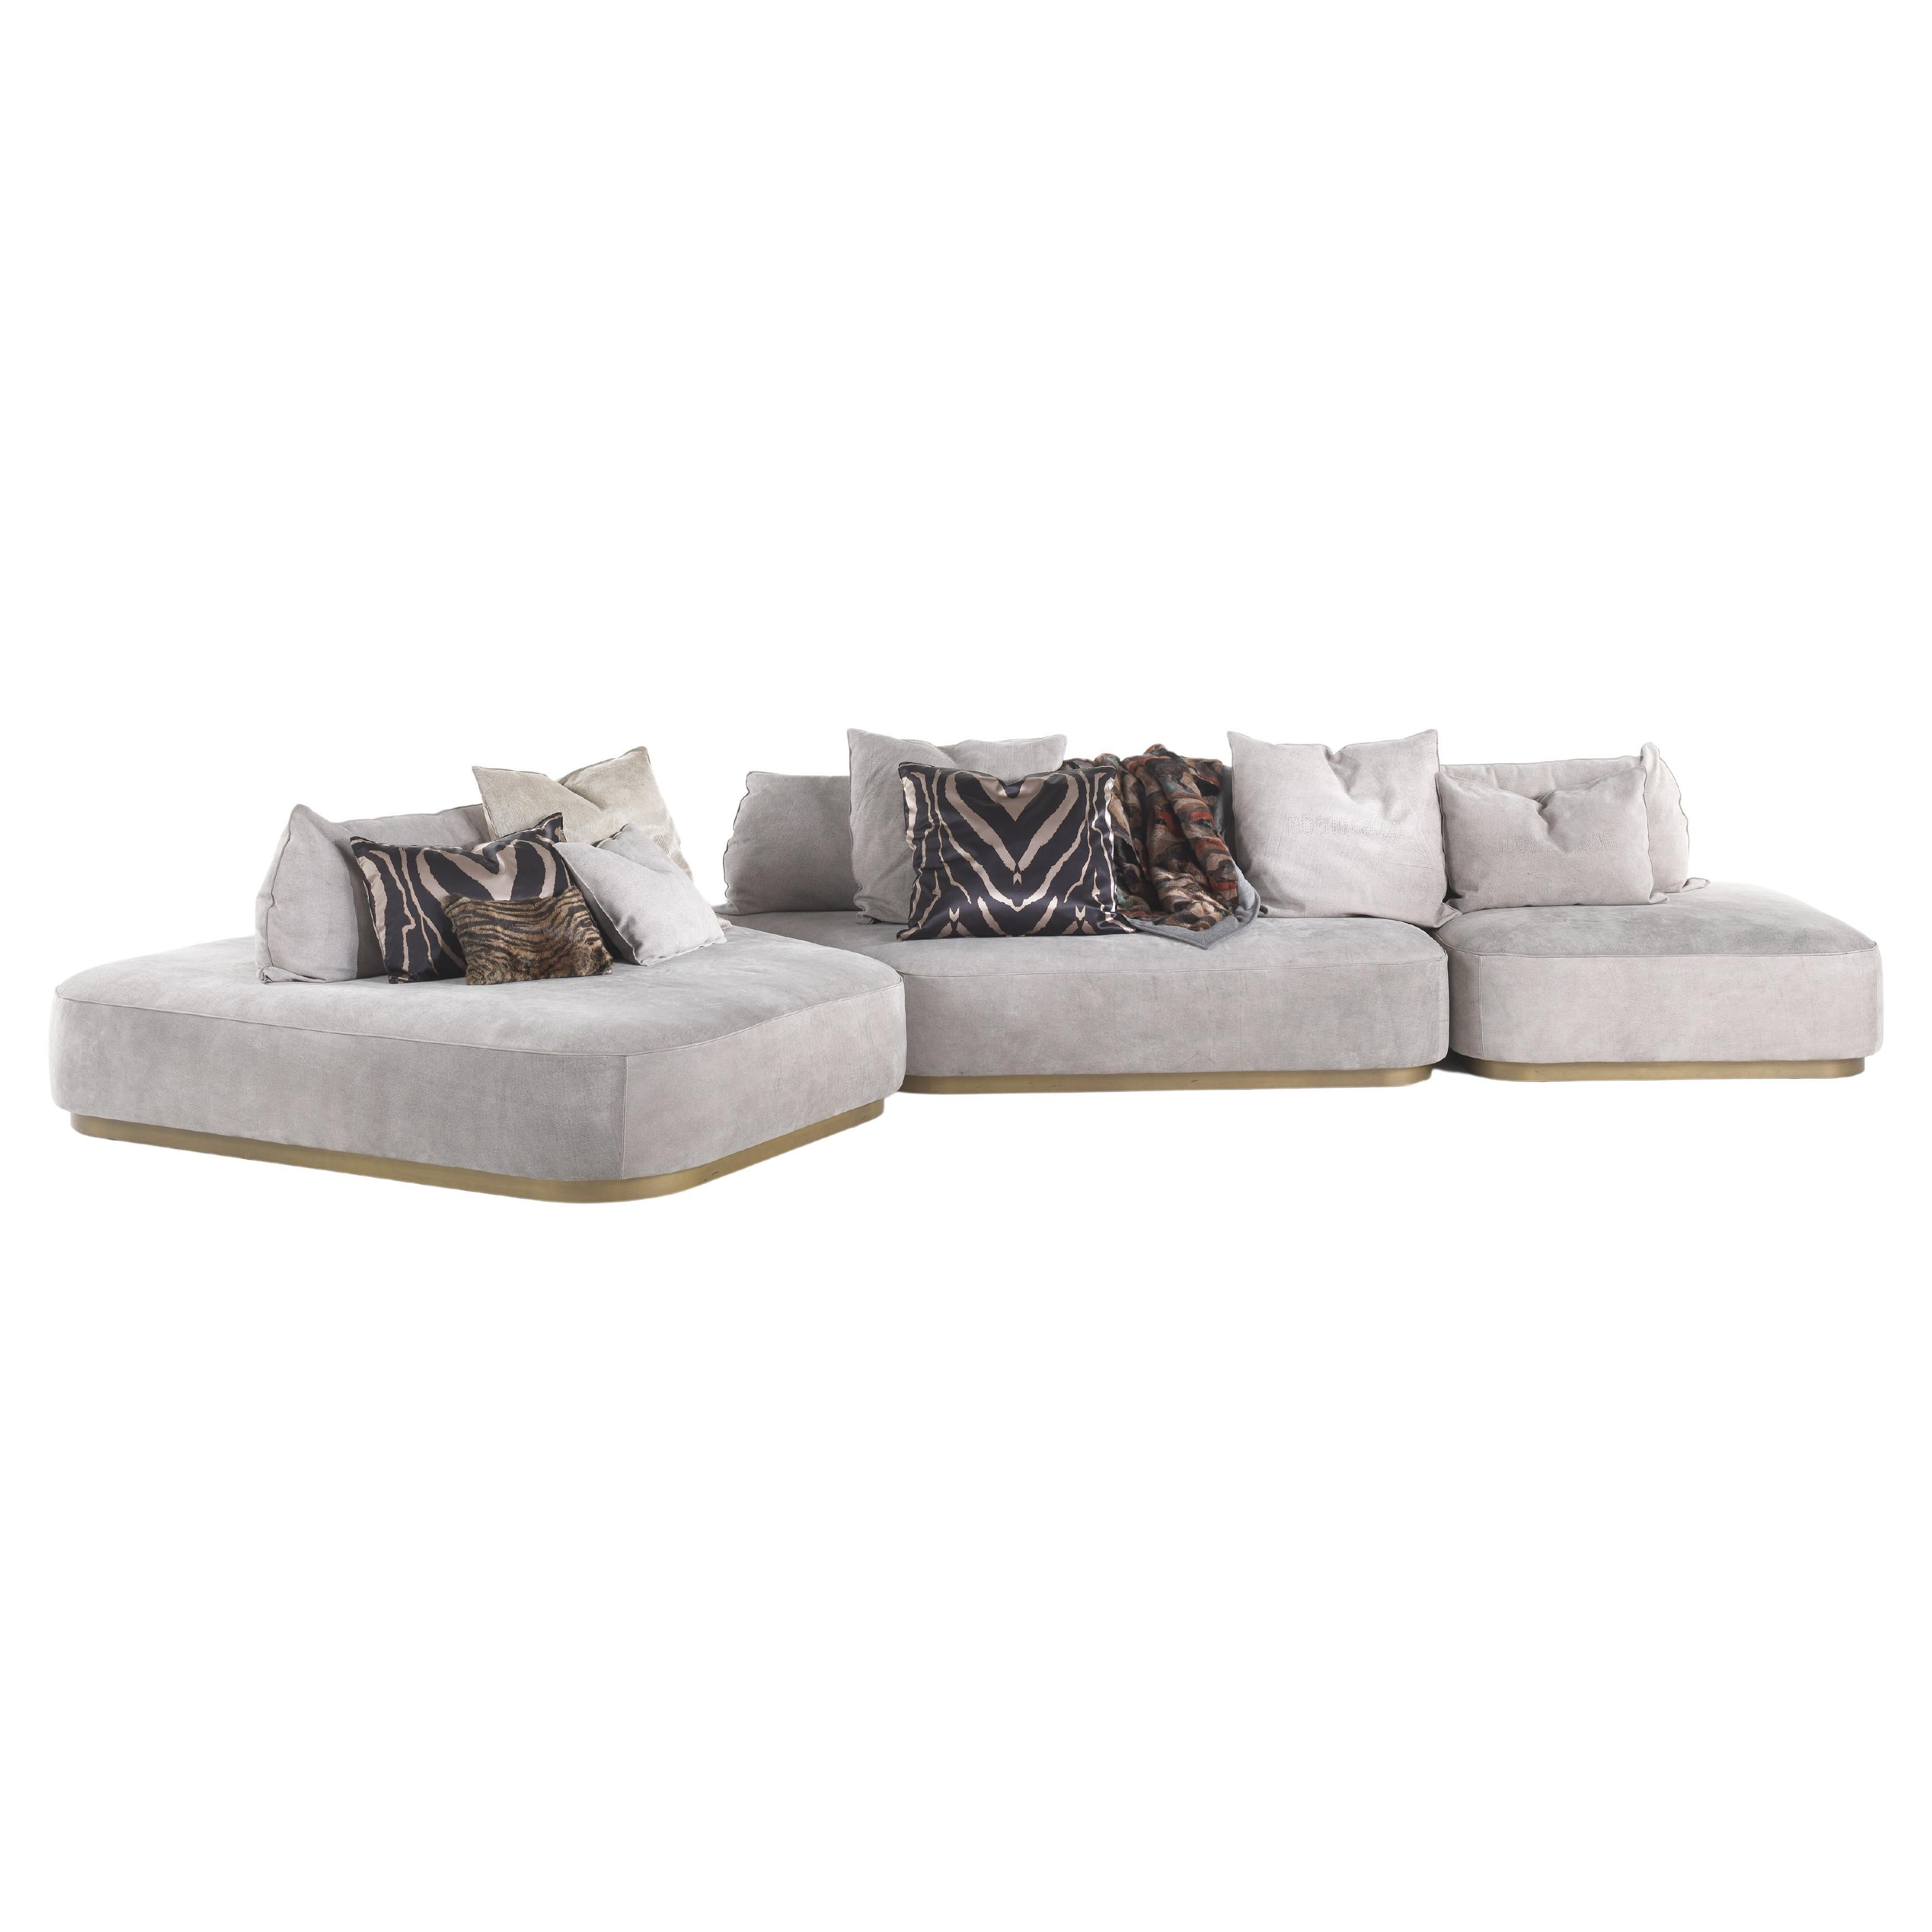 Modulares Baltimora-Sofa aus Leder des 21. Jahrhunderts von Roberto Cavalli Home Interiors